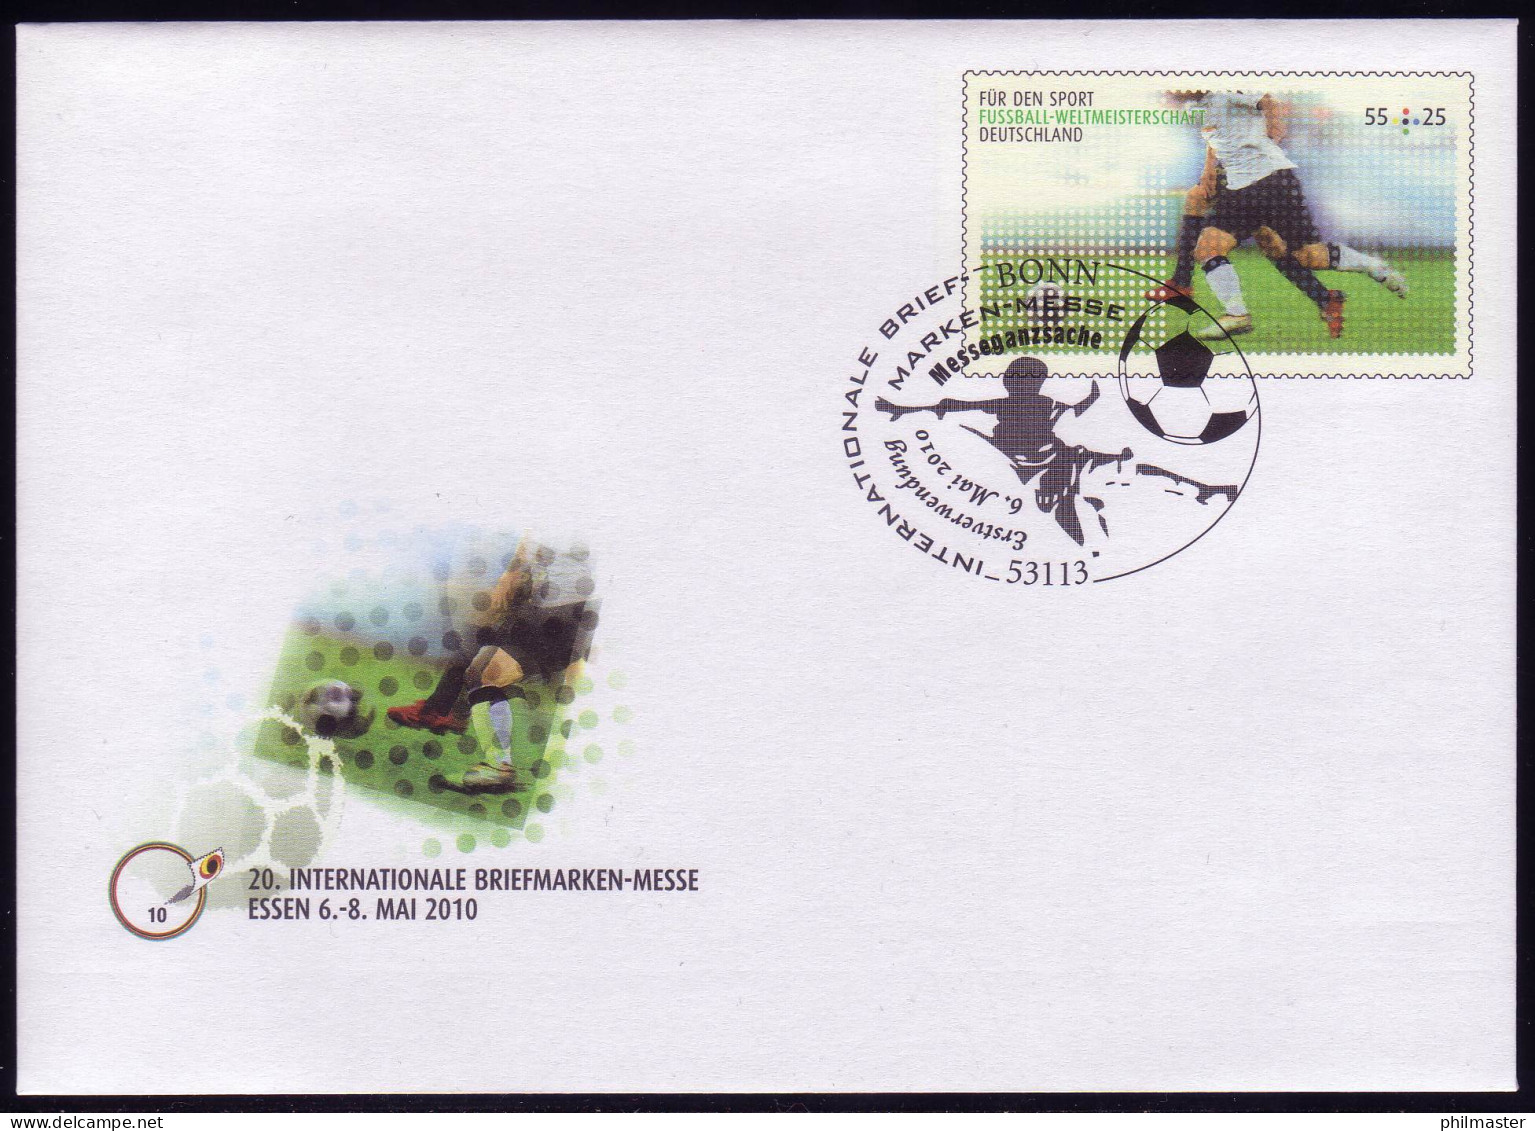 USo 207 Briefmarken-Messe Essen - Fußball-WM 2010, EV-O Bonn 6.5.10 - Enveloppes - Neuves